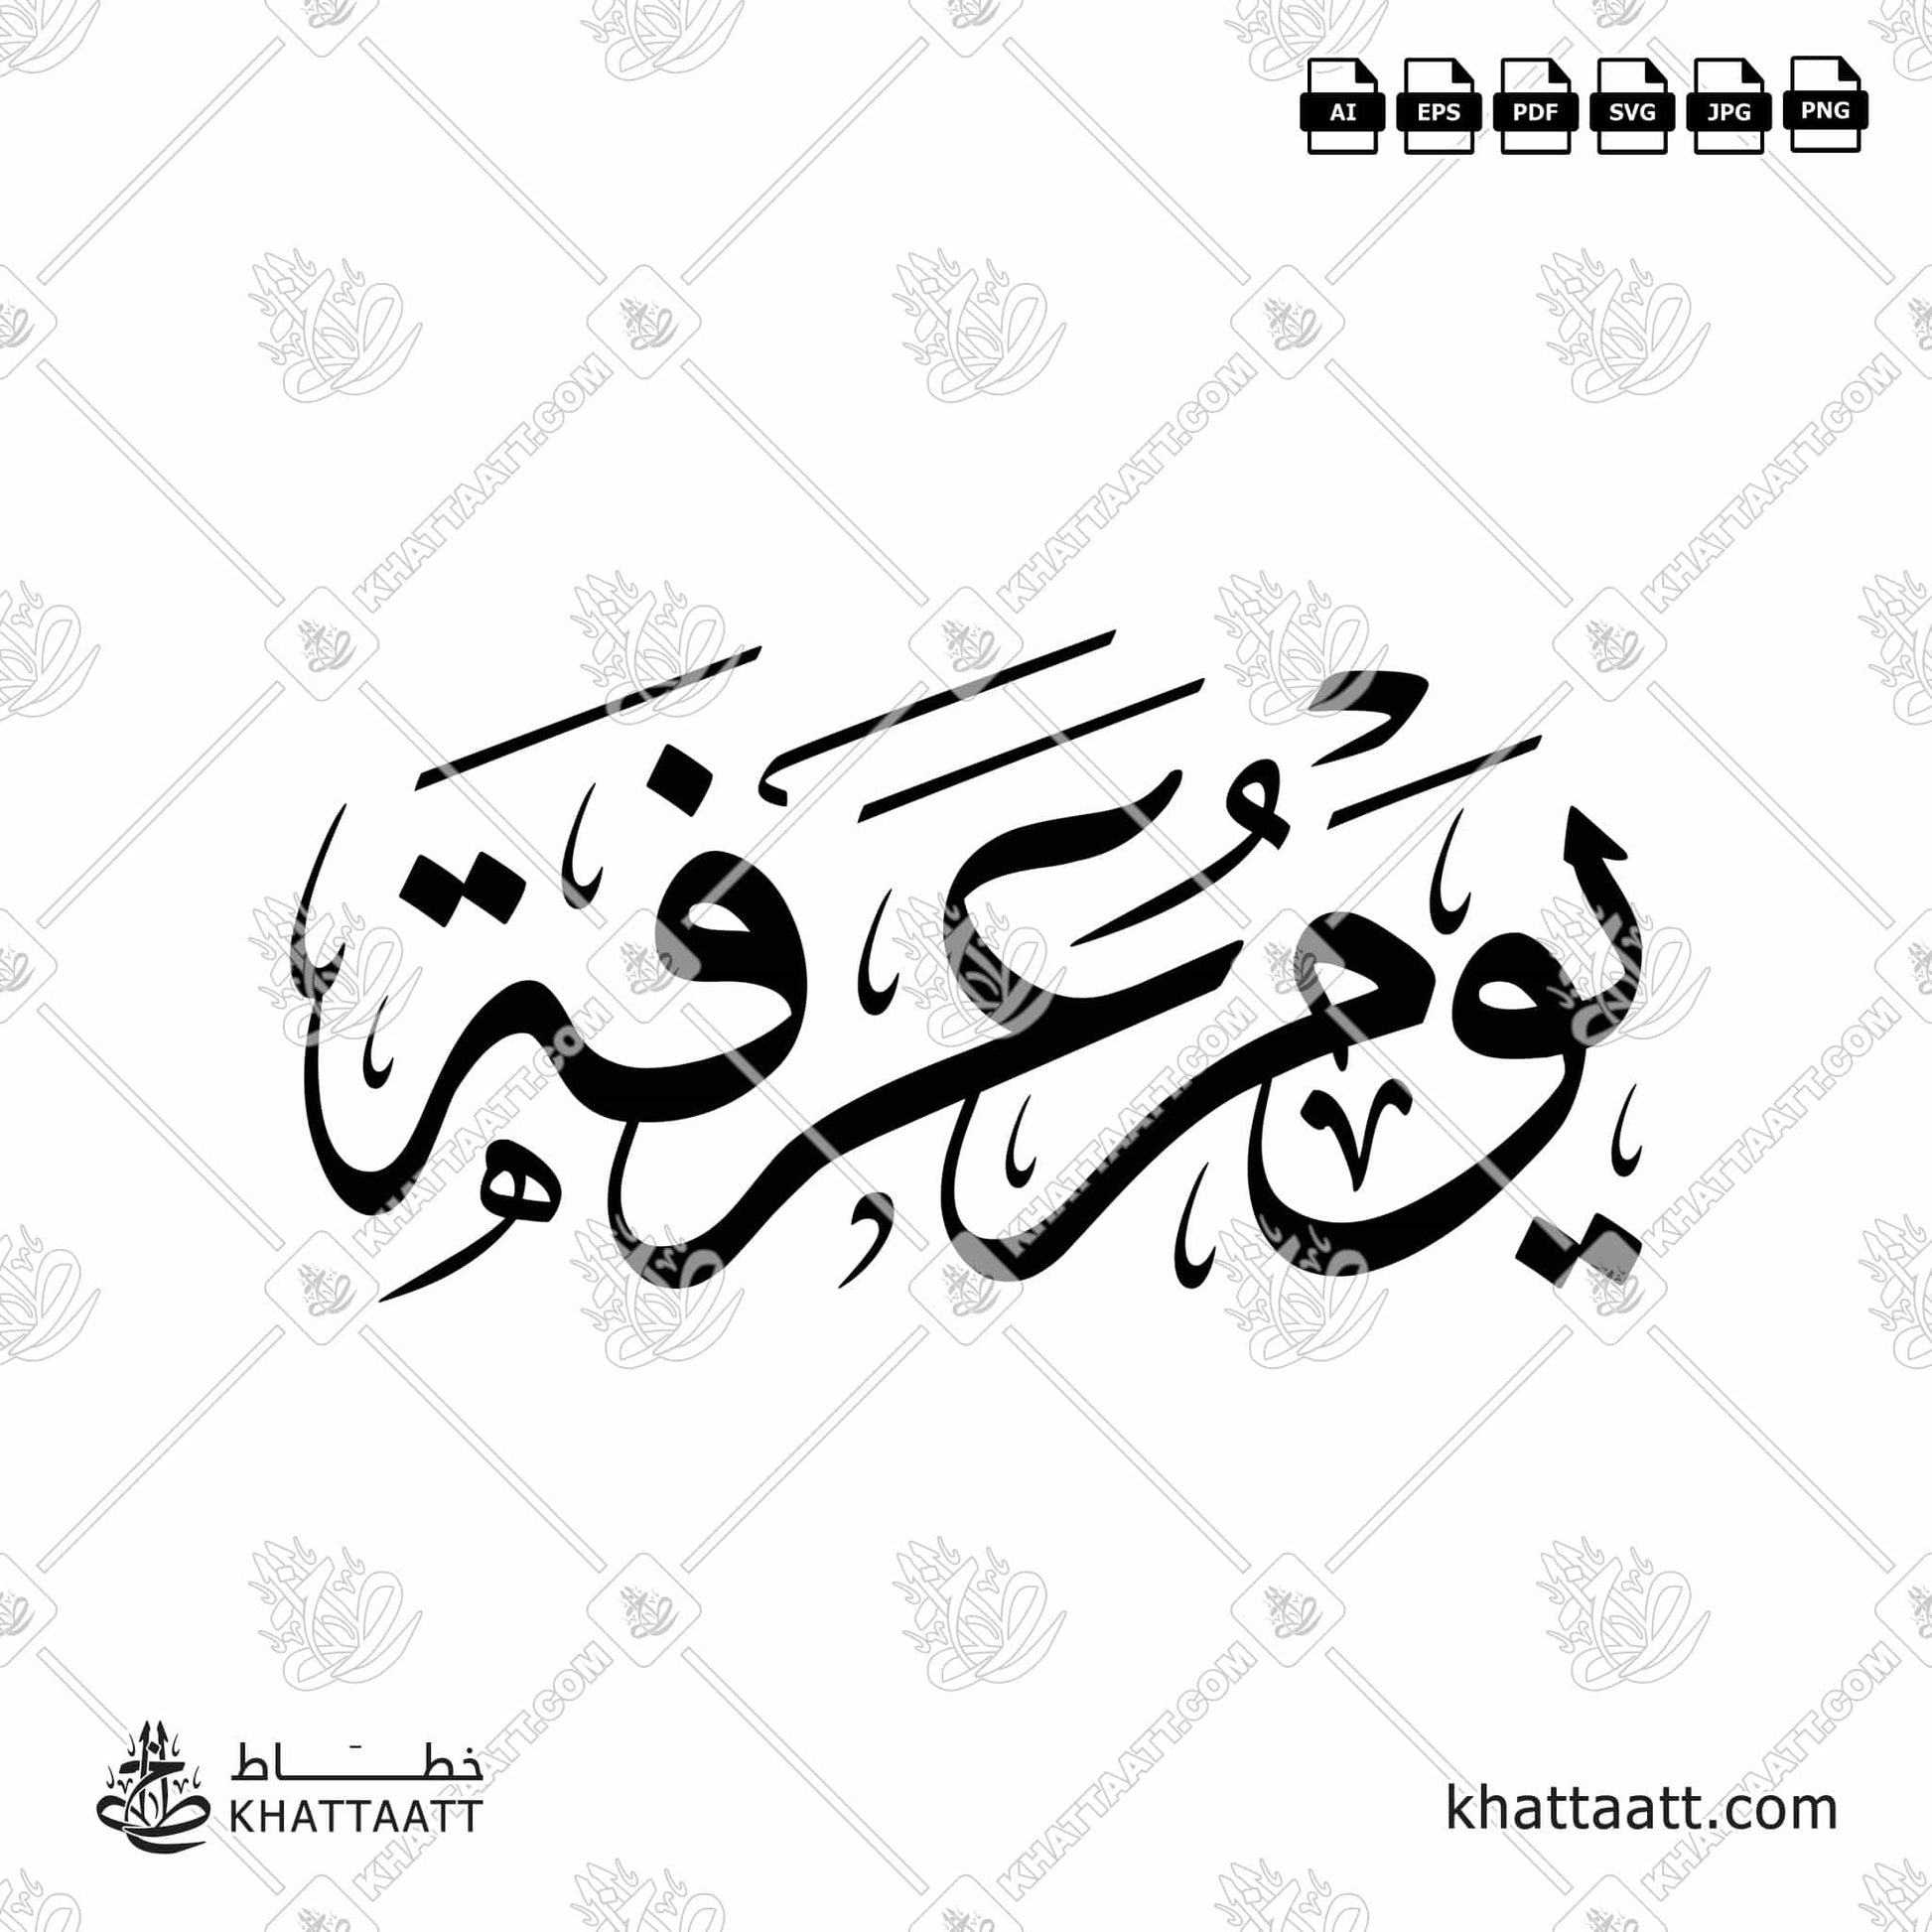 Download Arabic calligraphy تحميل مخطوطة خط عربي of Day of Arafah - يوم عرفة (T021) Thuluth - خط الثلث in vector فيكتور and png